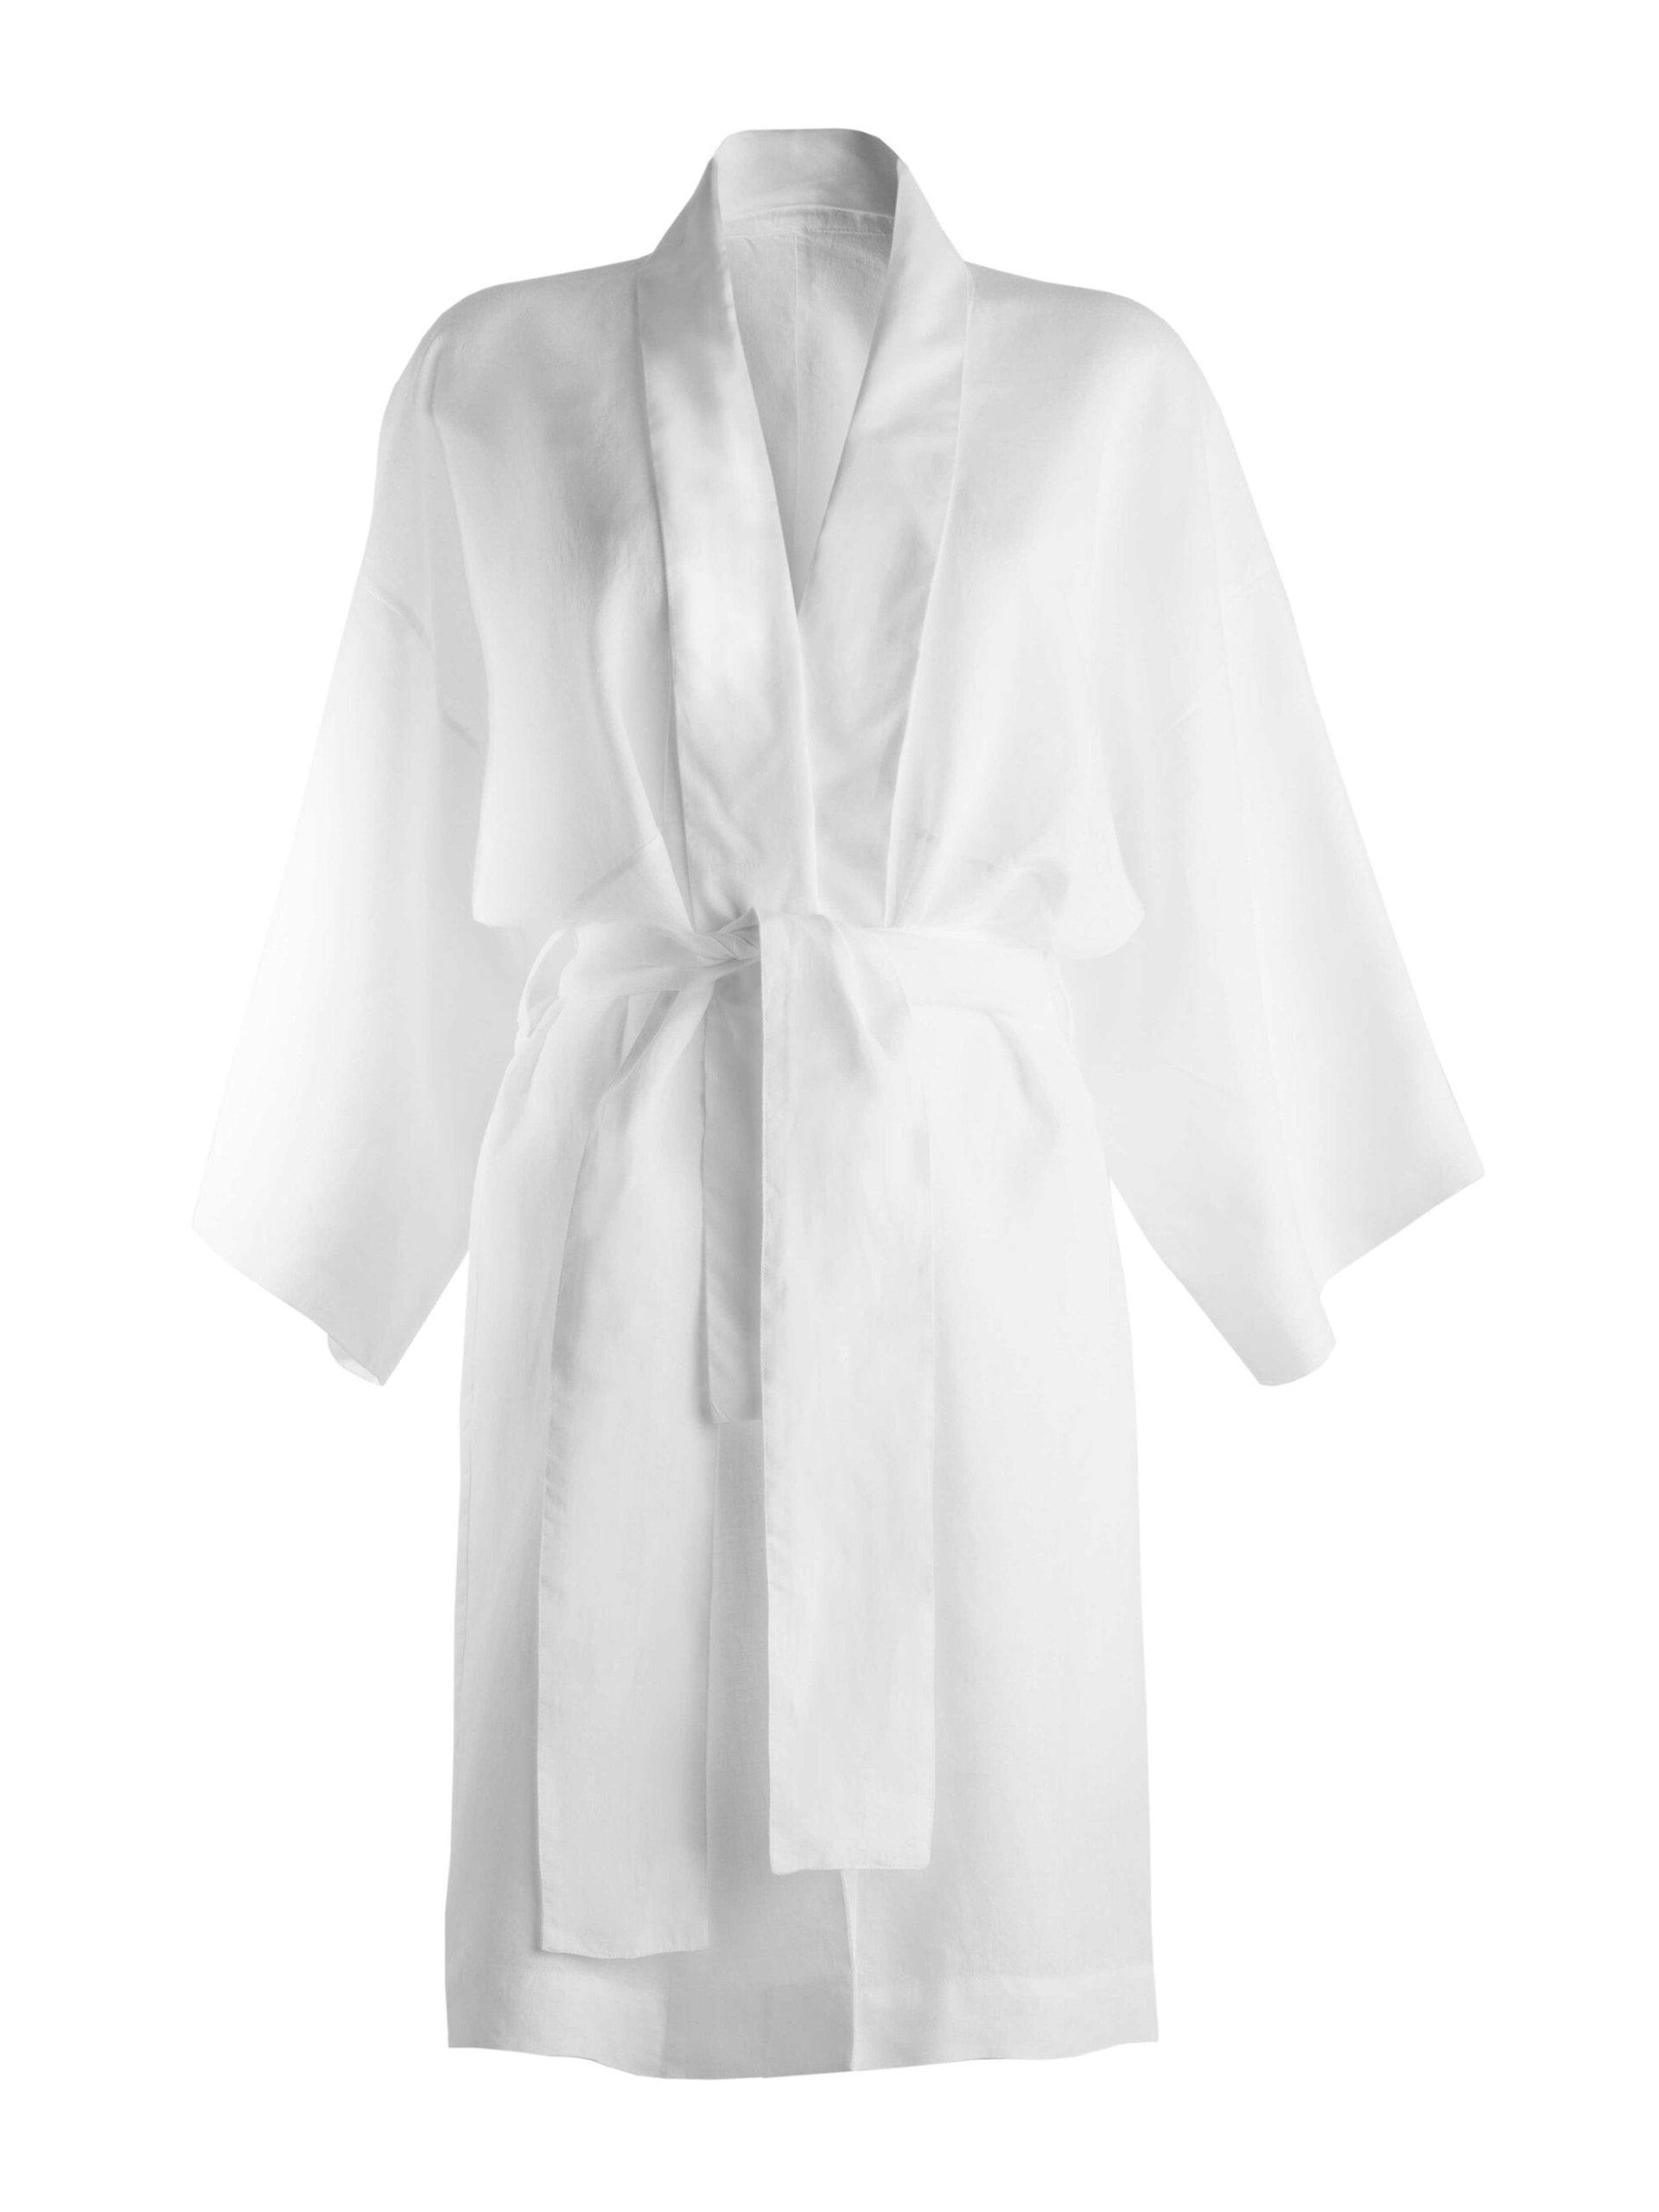 White linen kimono